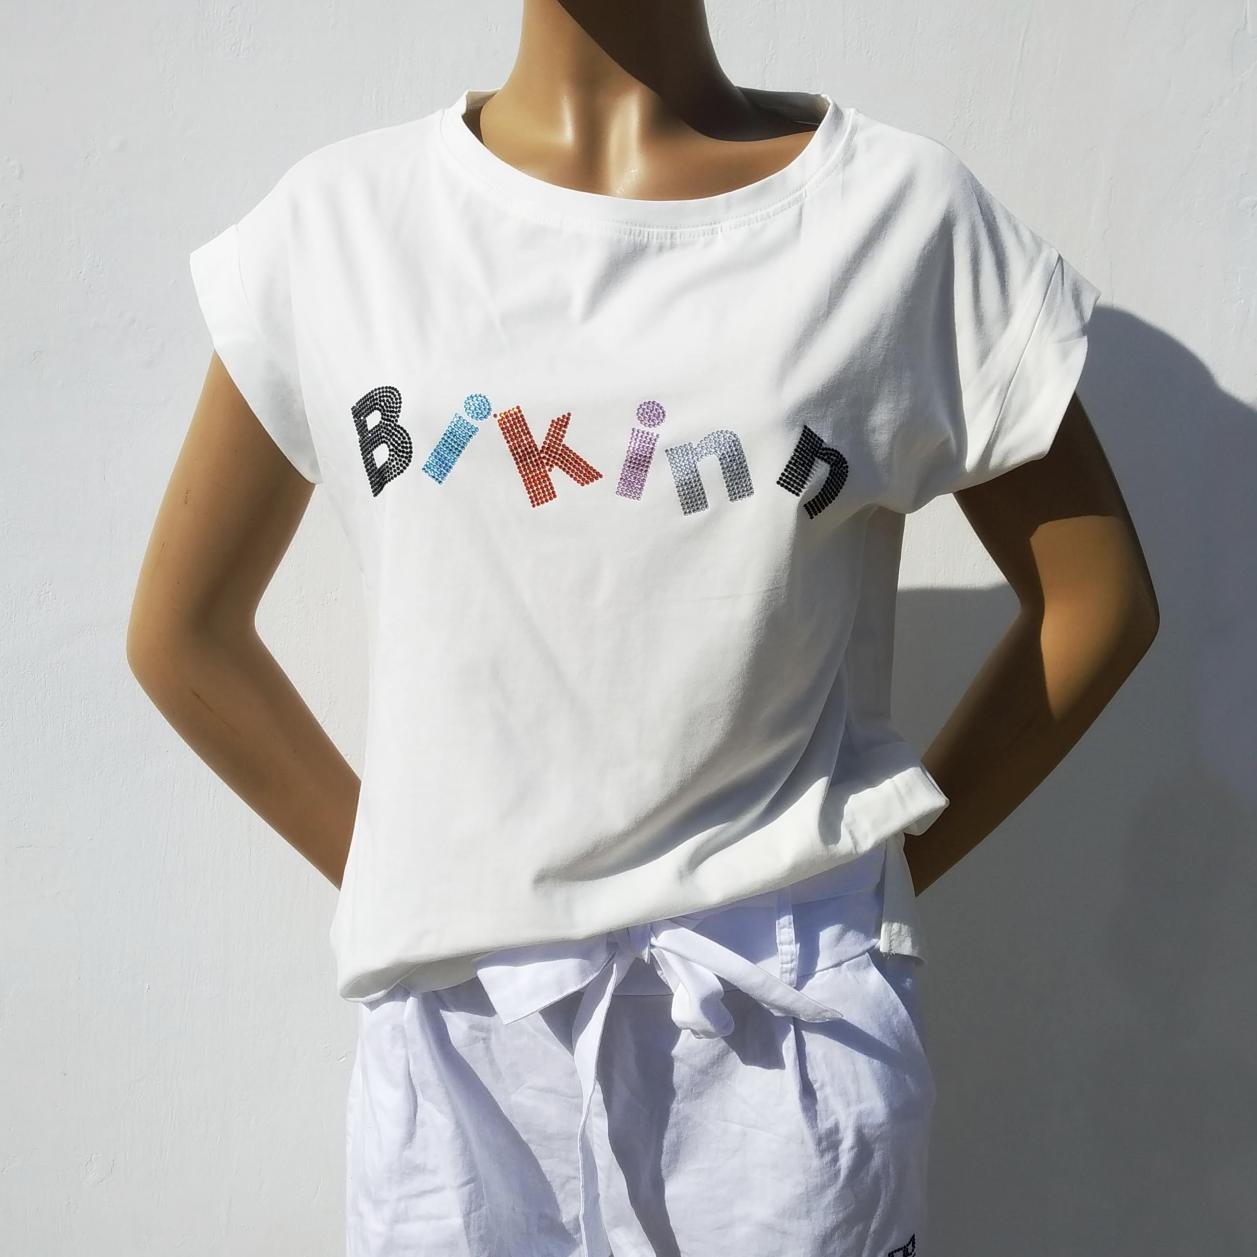 White  short sleeves cotton-lycra T-shirt, multicolor rhinestones crystals printed logo. Bling-bling fashion. bikinn.com